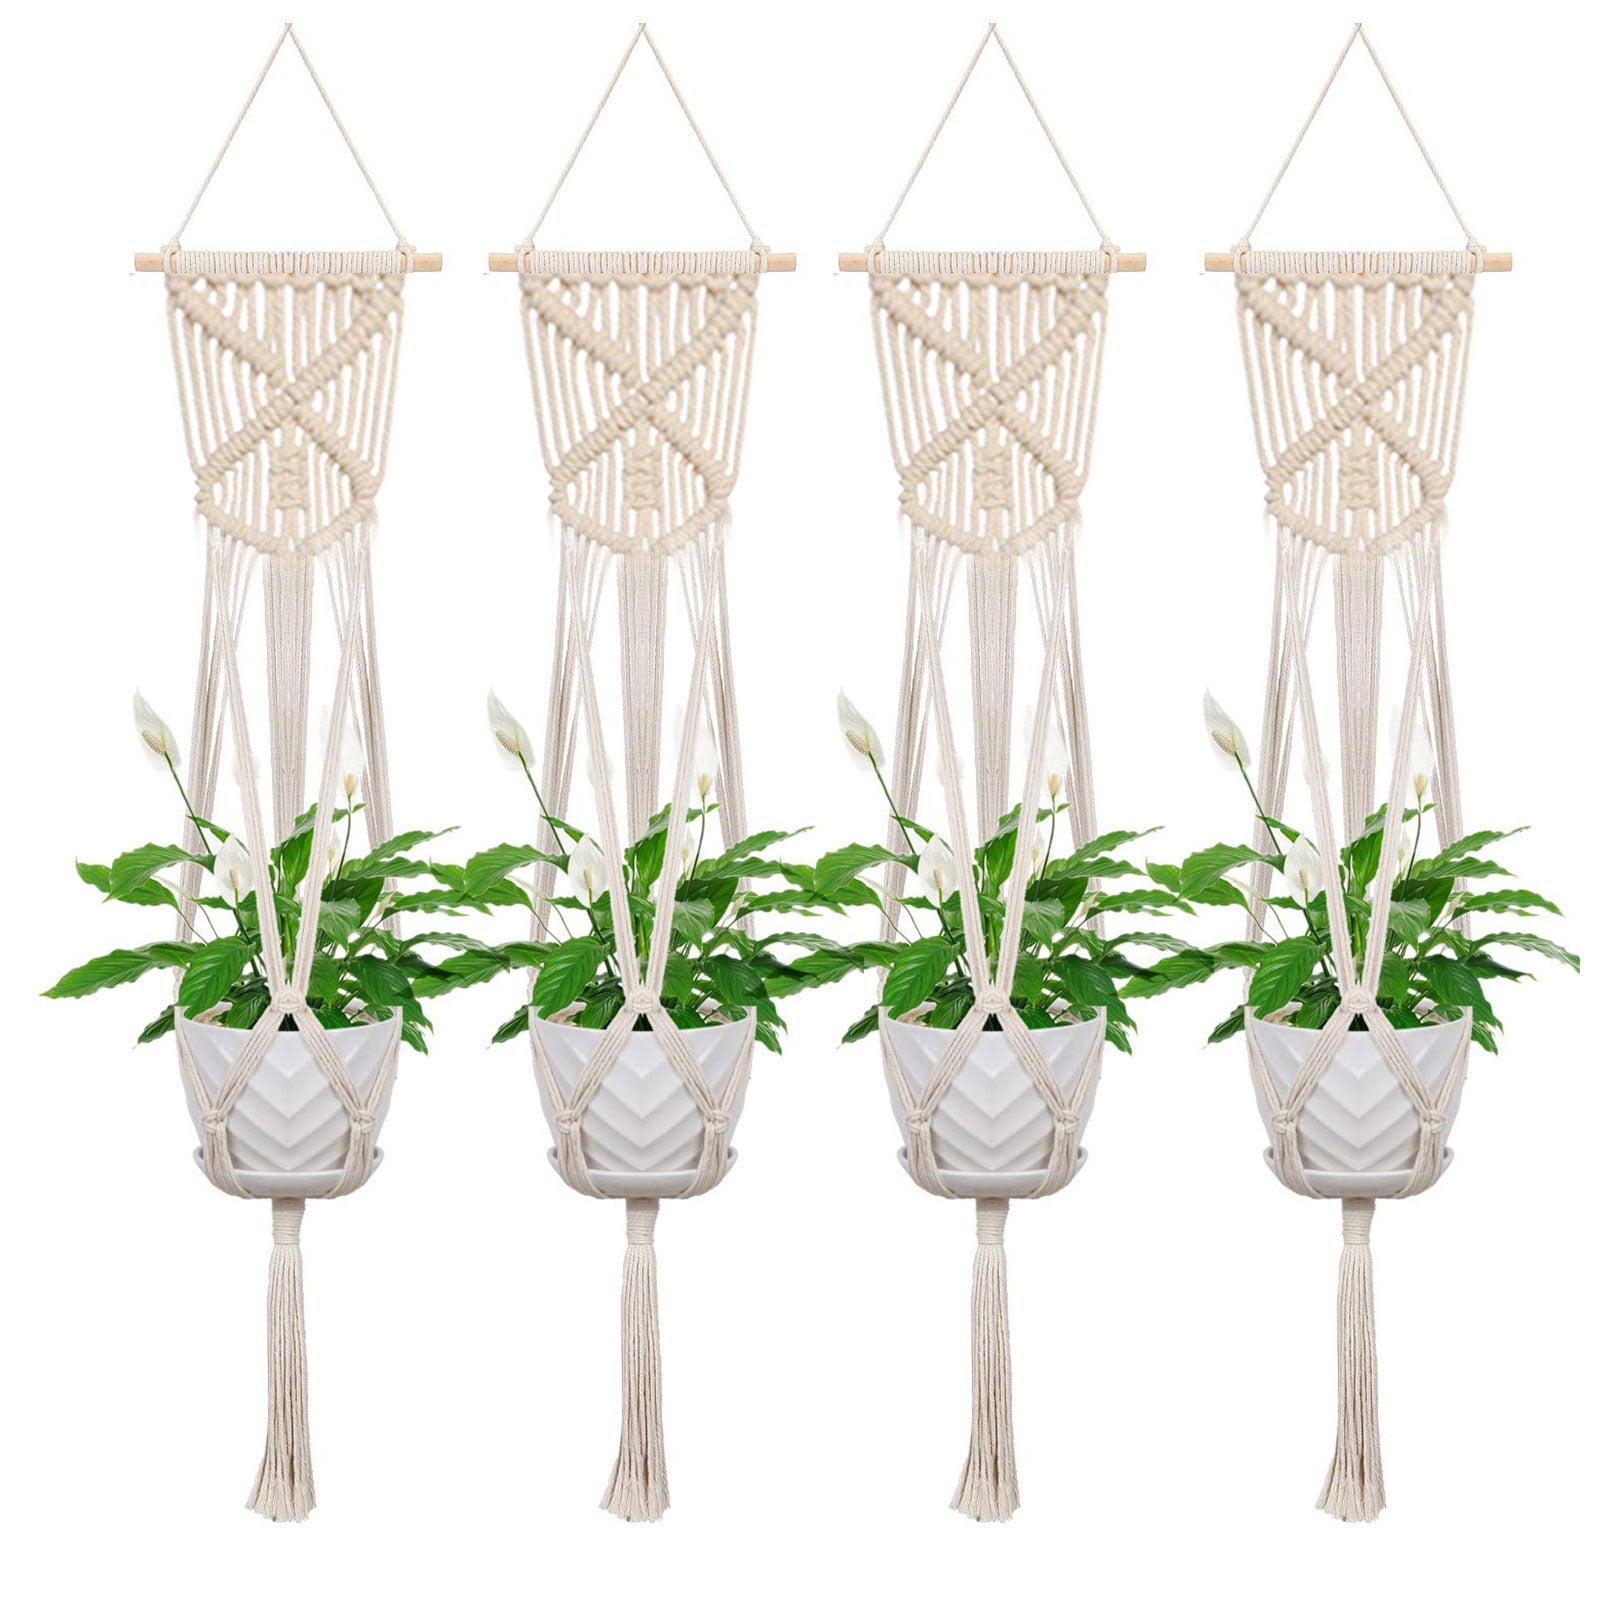 Macrame Plant Hangers Indoor Cotton White Rope Flower Pot Hanging Decor Hot